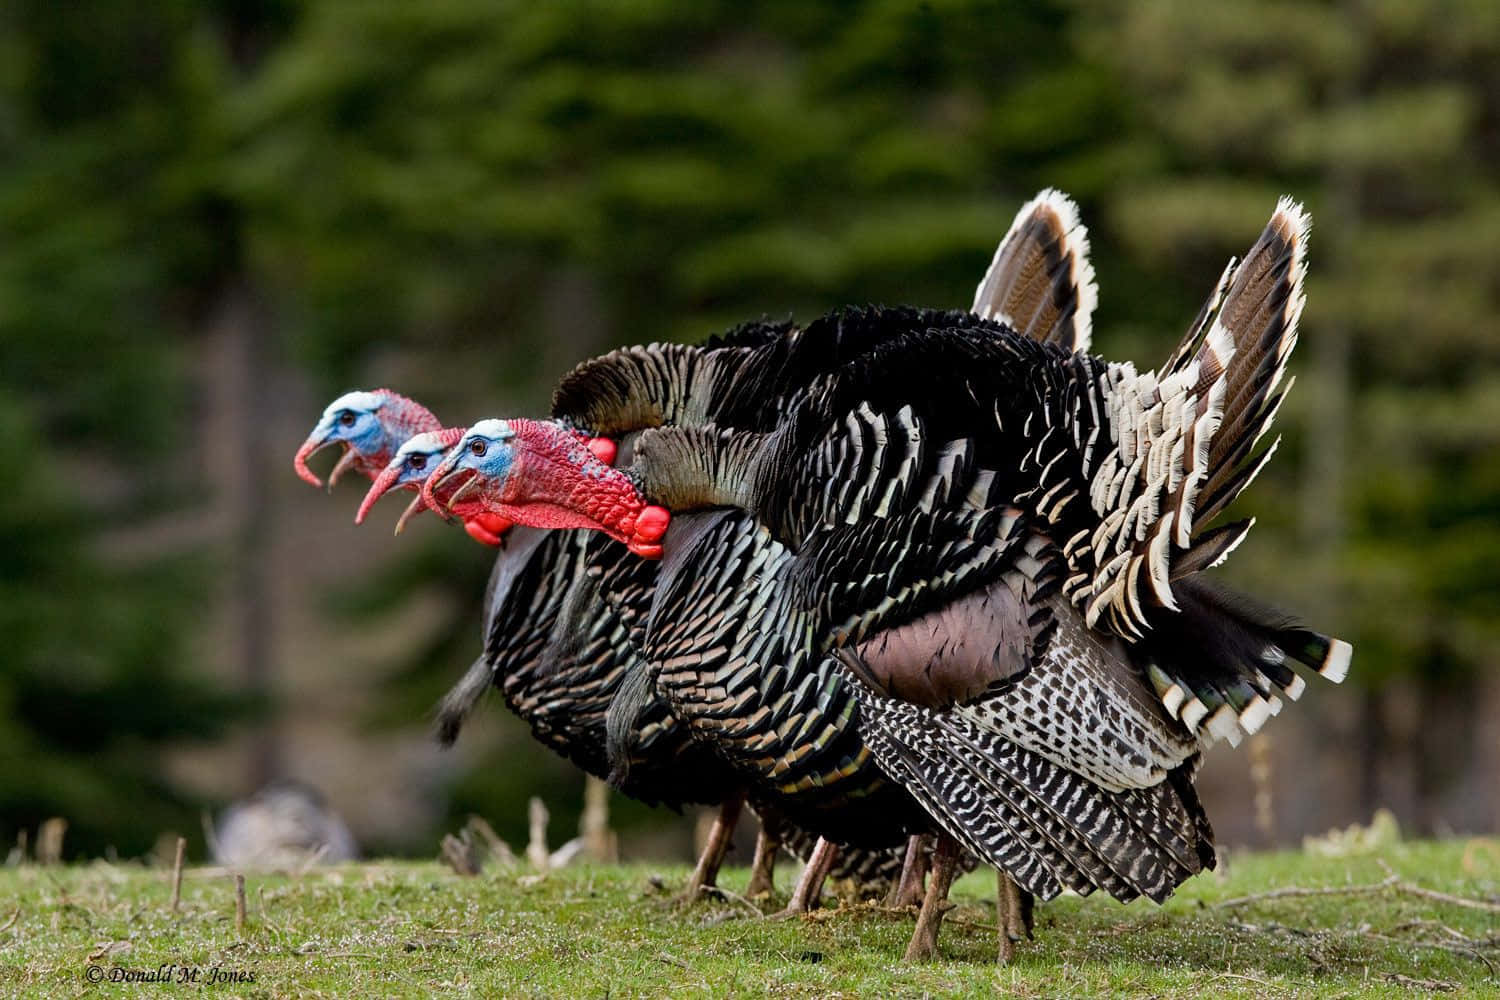 A Group Of Turkeys Standing In A Field